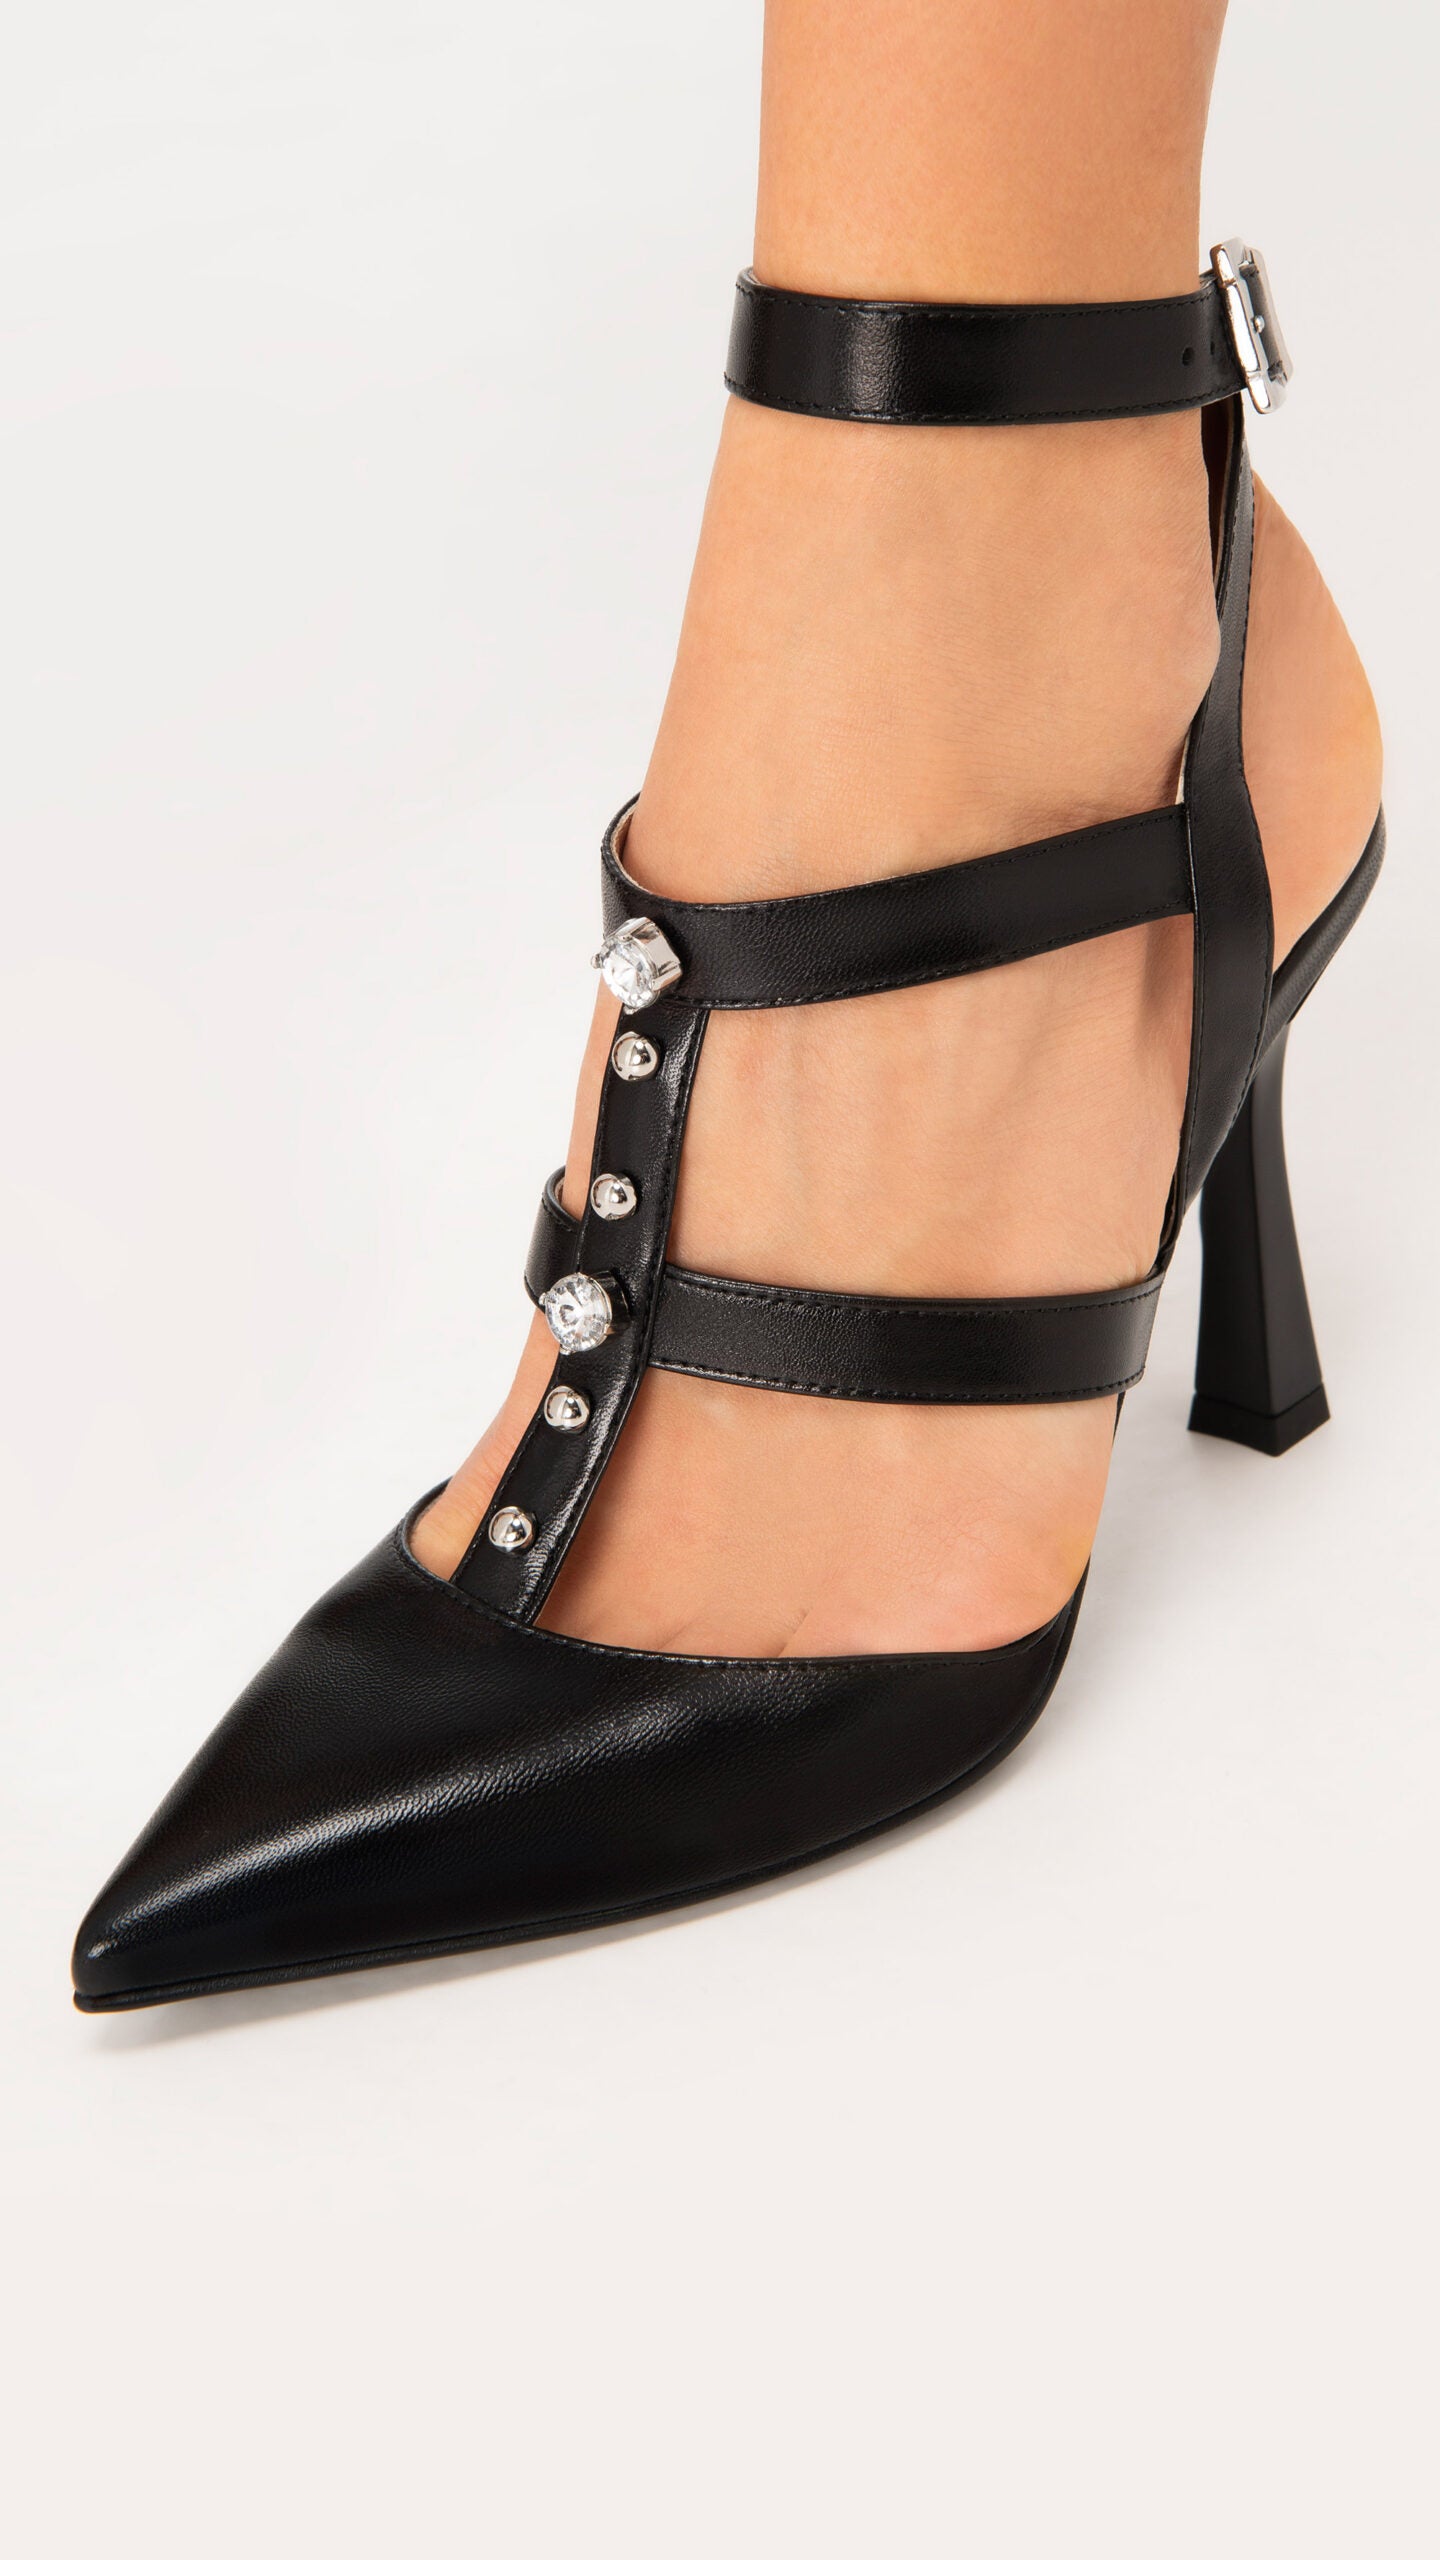 NeroGiardini Pandora Black Leather Heeled Shoe with Buckle.